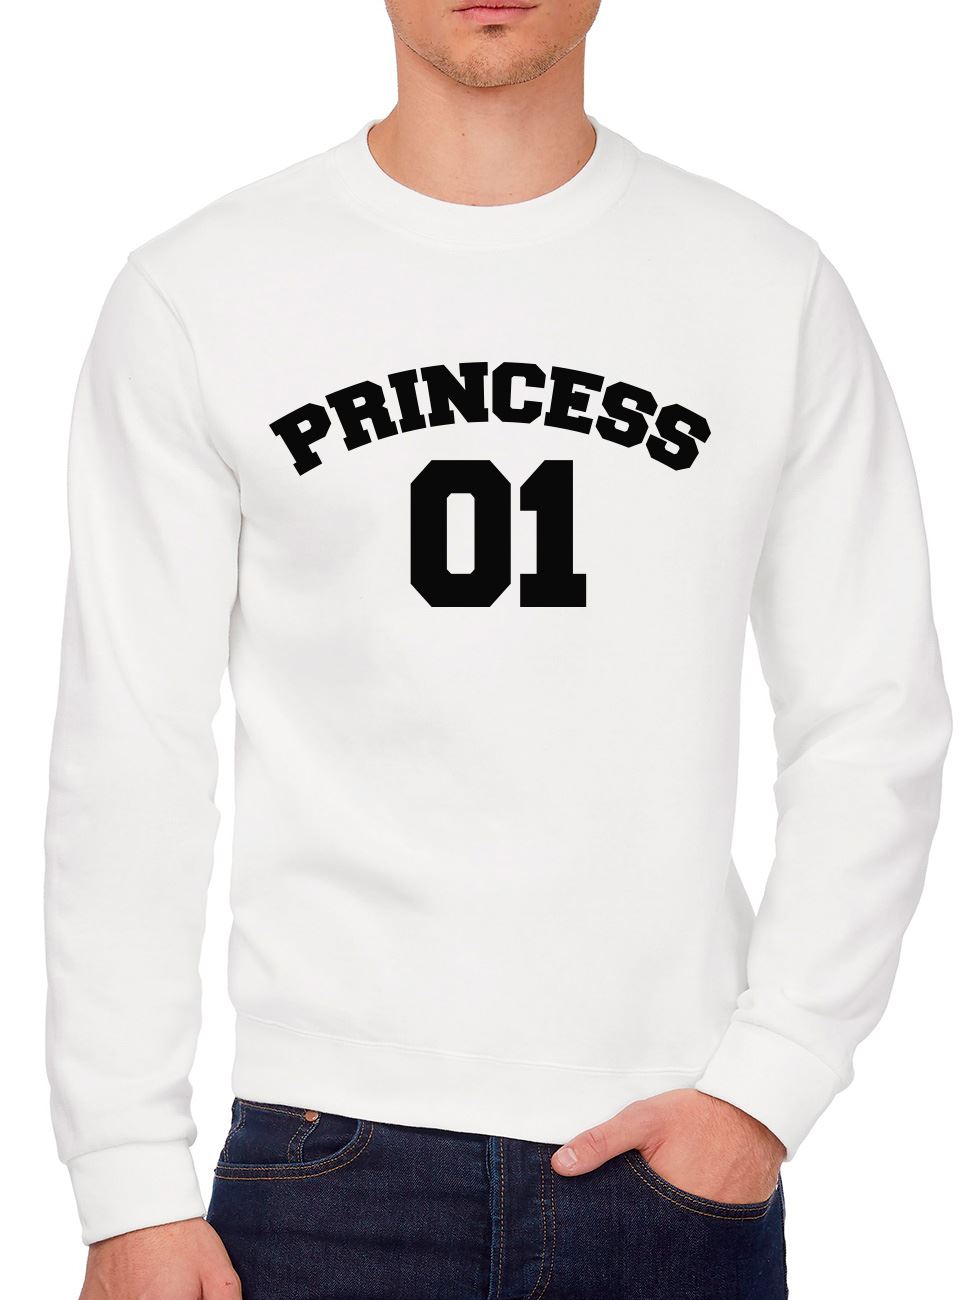 Princess Number 1 - Youth & Mens Sweatshirt